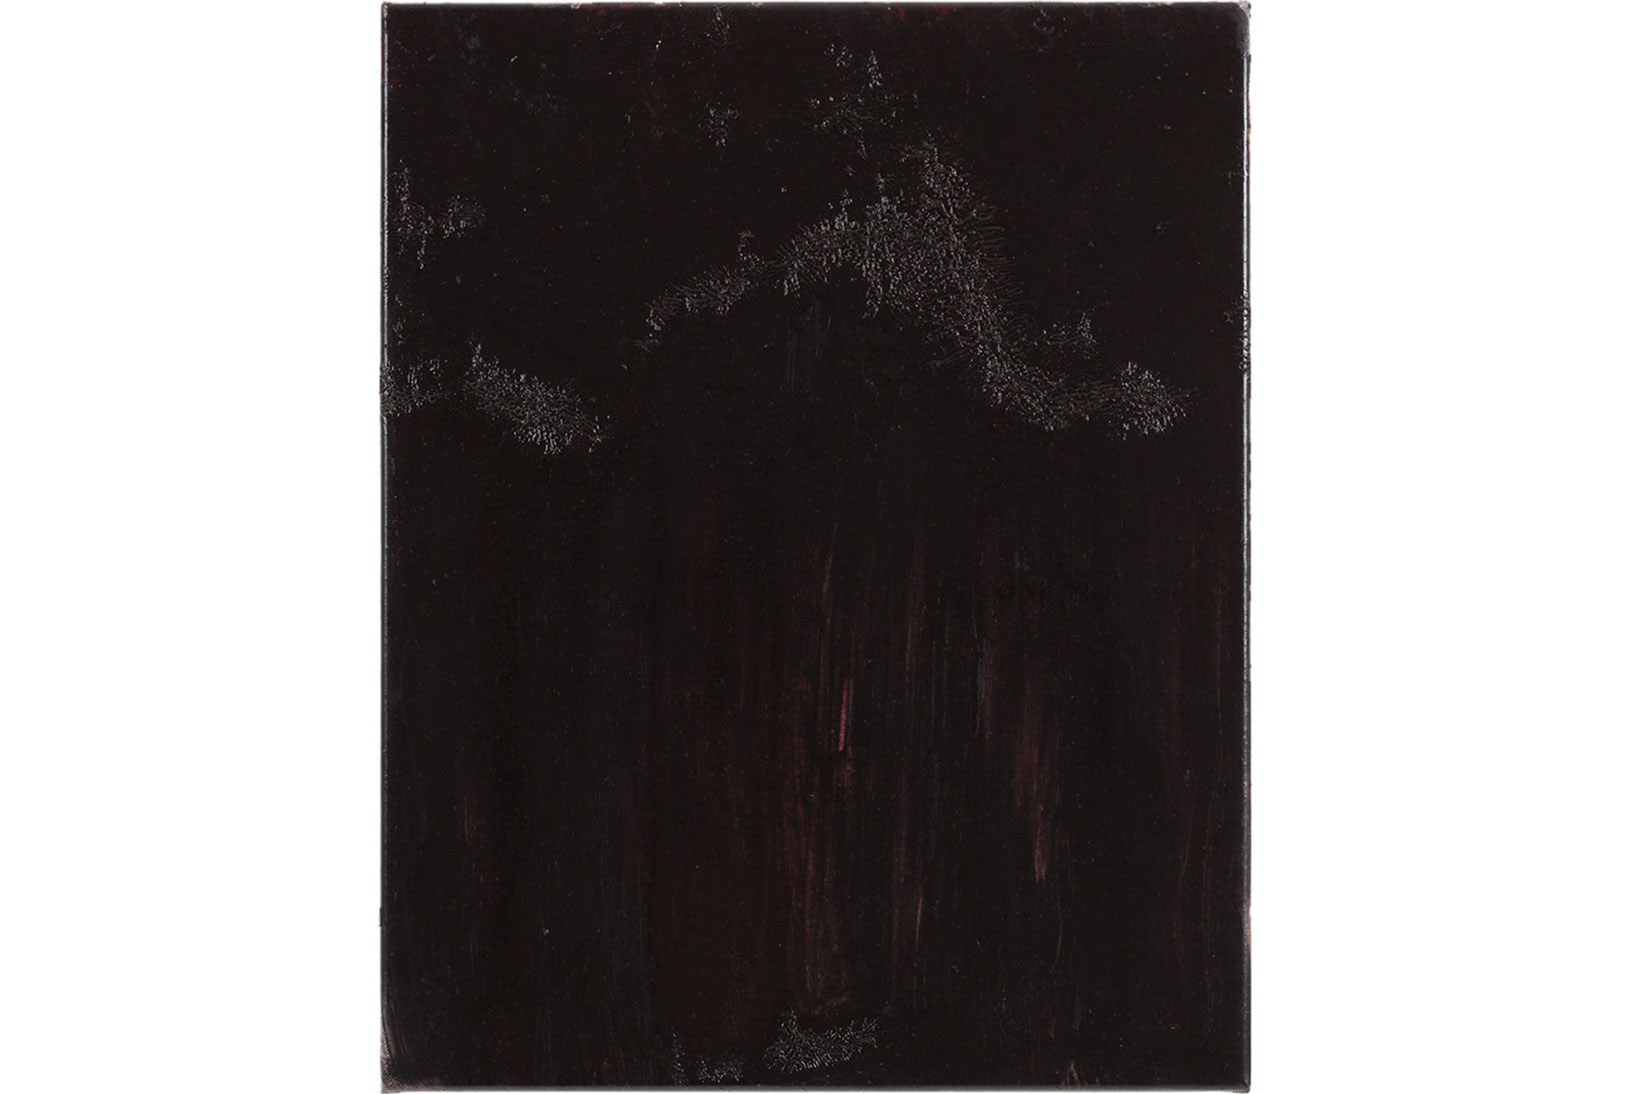 Julia Selin, "Skinnet stasar", 2014, oil on canvas, 44 x 37 cm